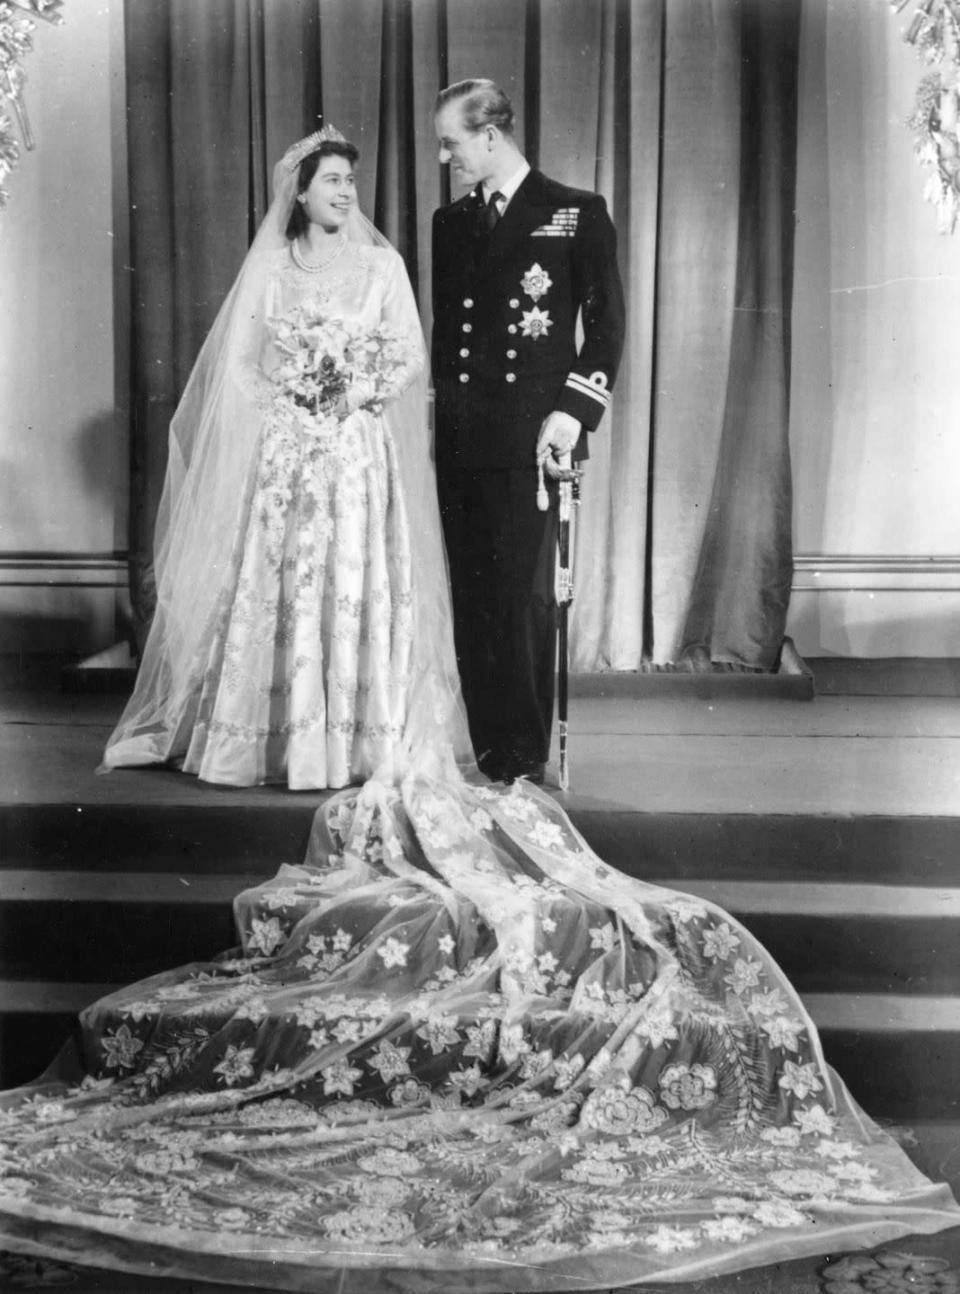 <p>Princess Elizabeth with Philip Mountbatten on their wedding day, 20th November 1947.</p>